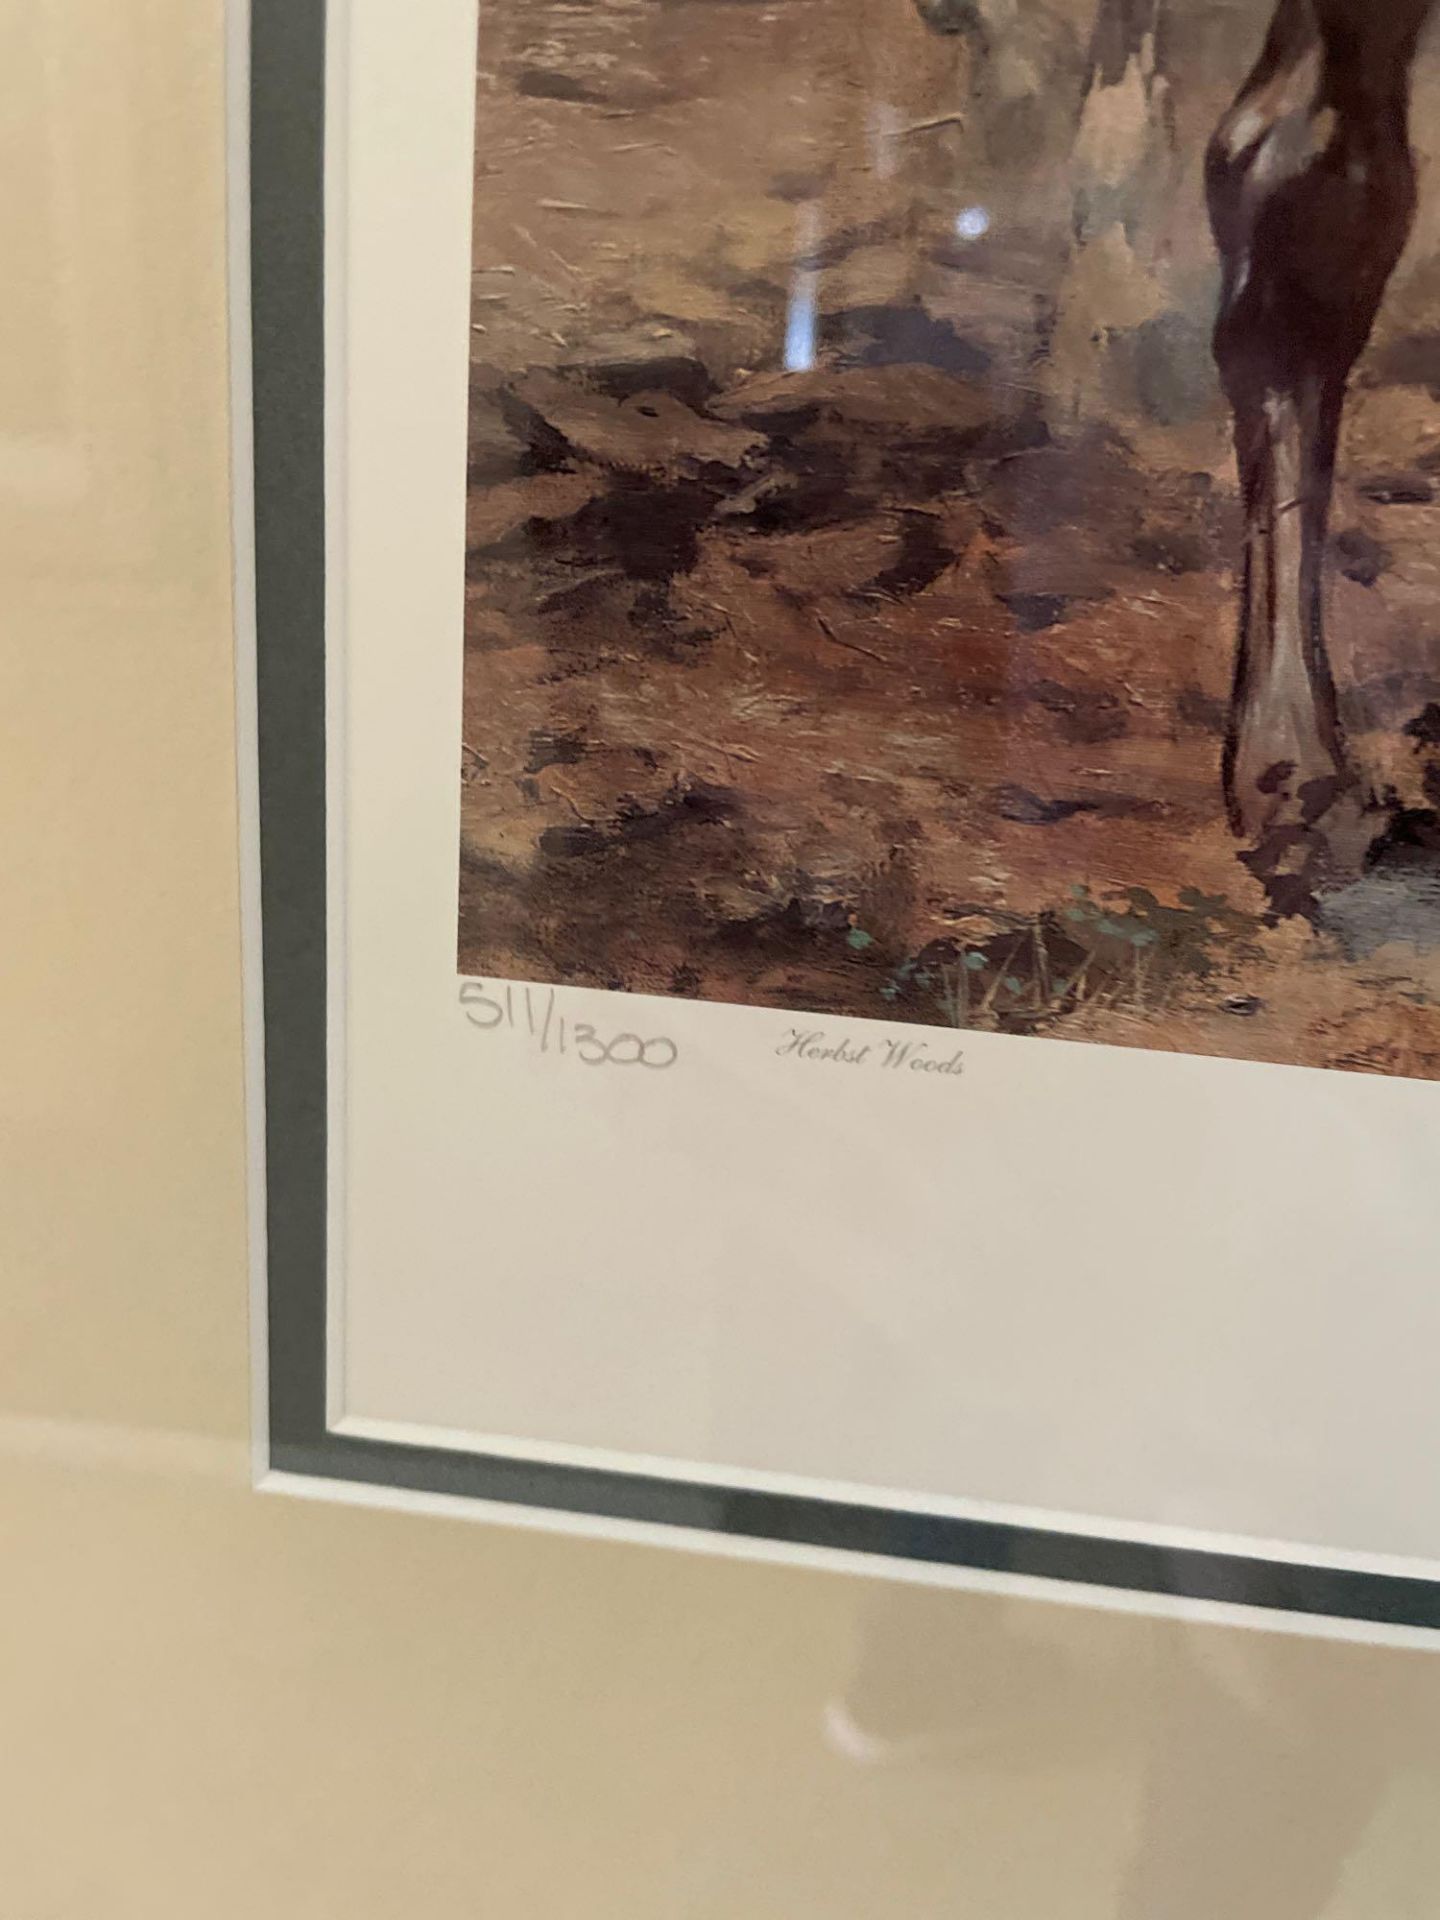 McPherson's ridge art framed print under glass 511/1300 by Don Troiani - Image 4 of 4